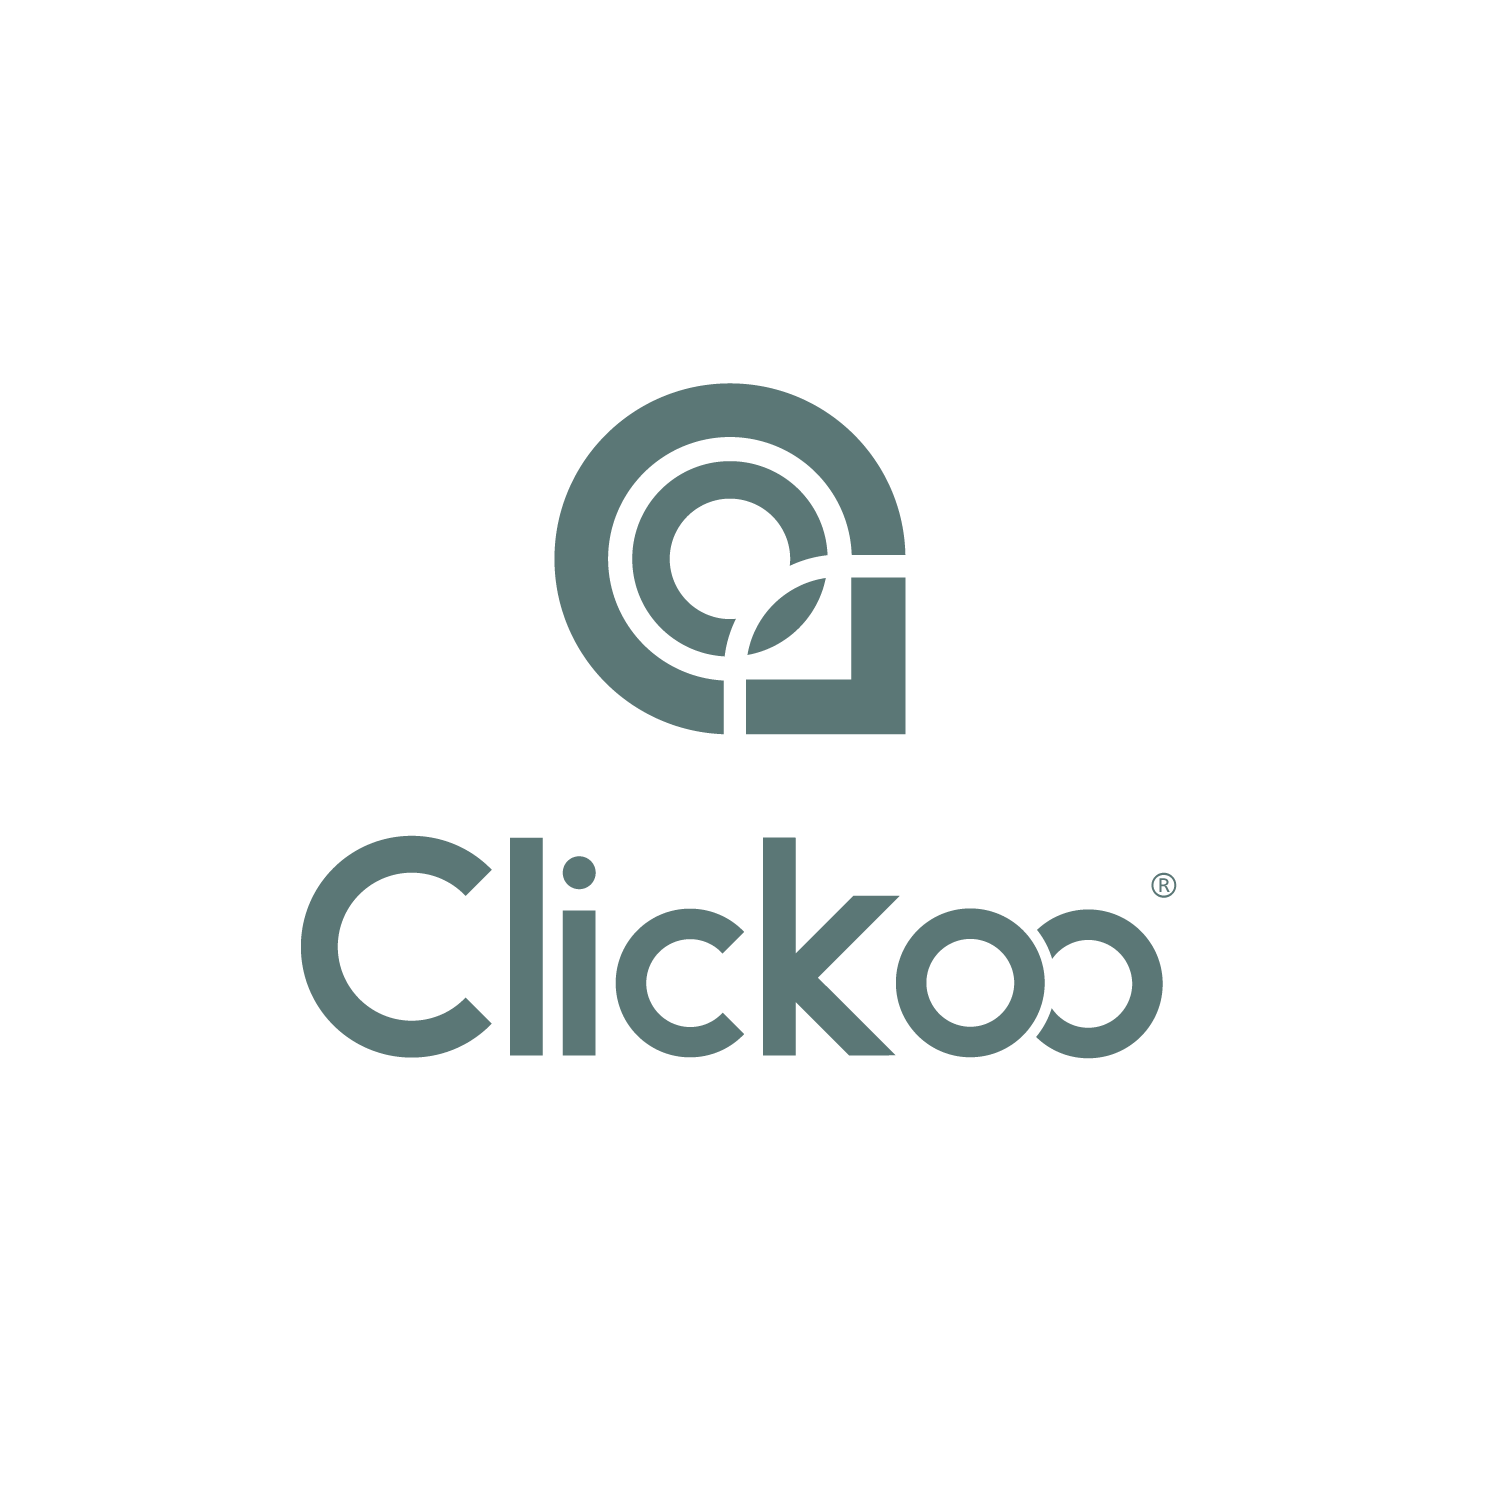 (c) Clickoousa.com